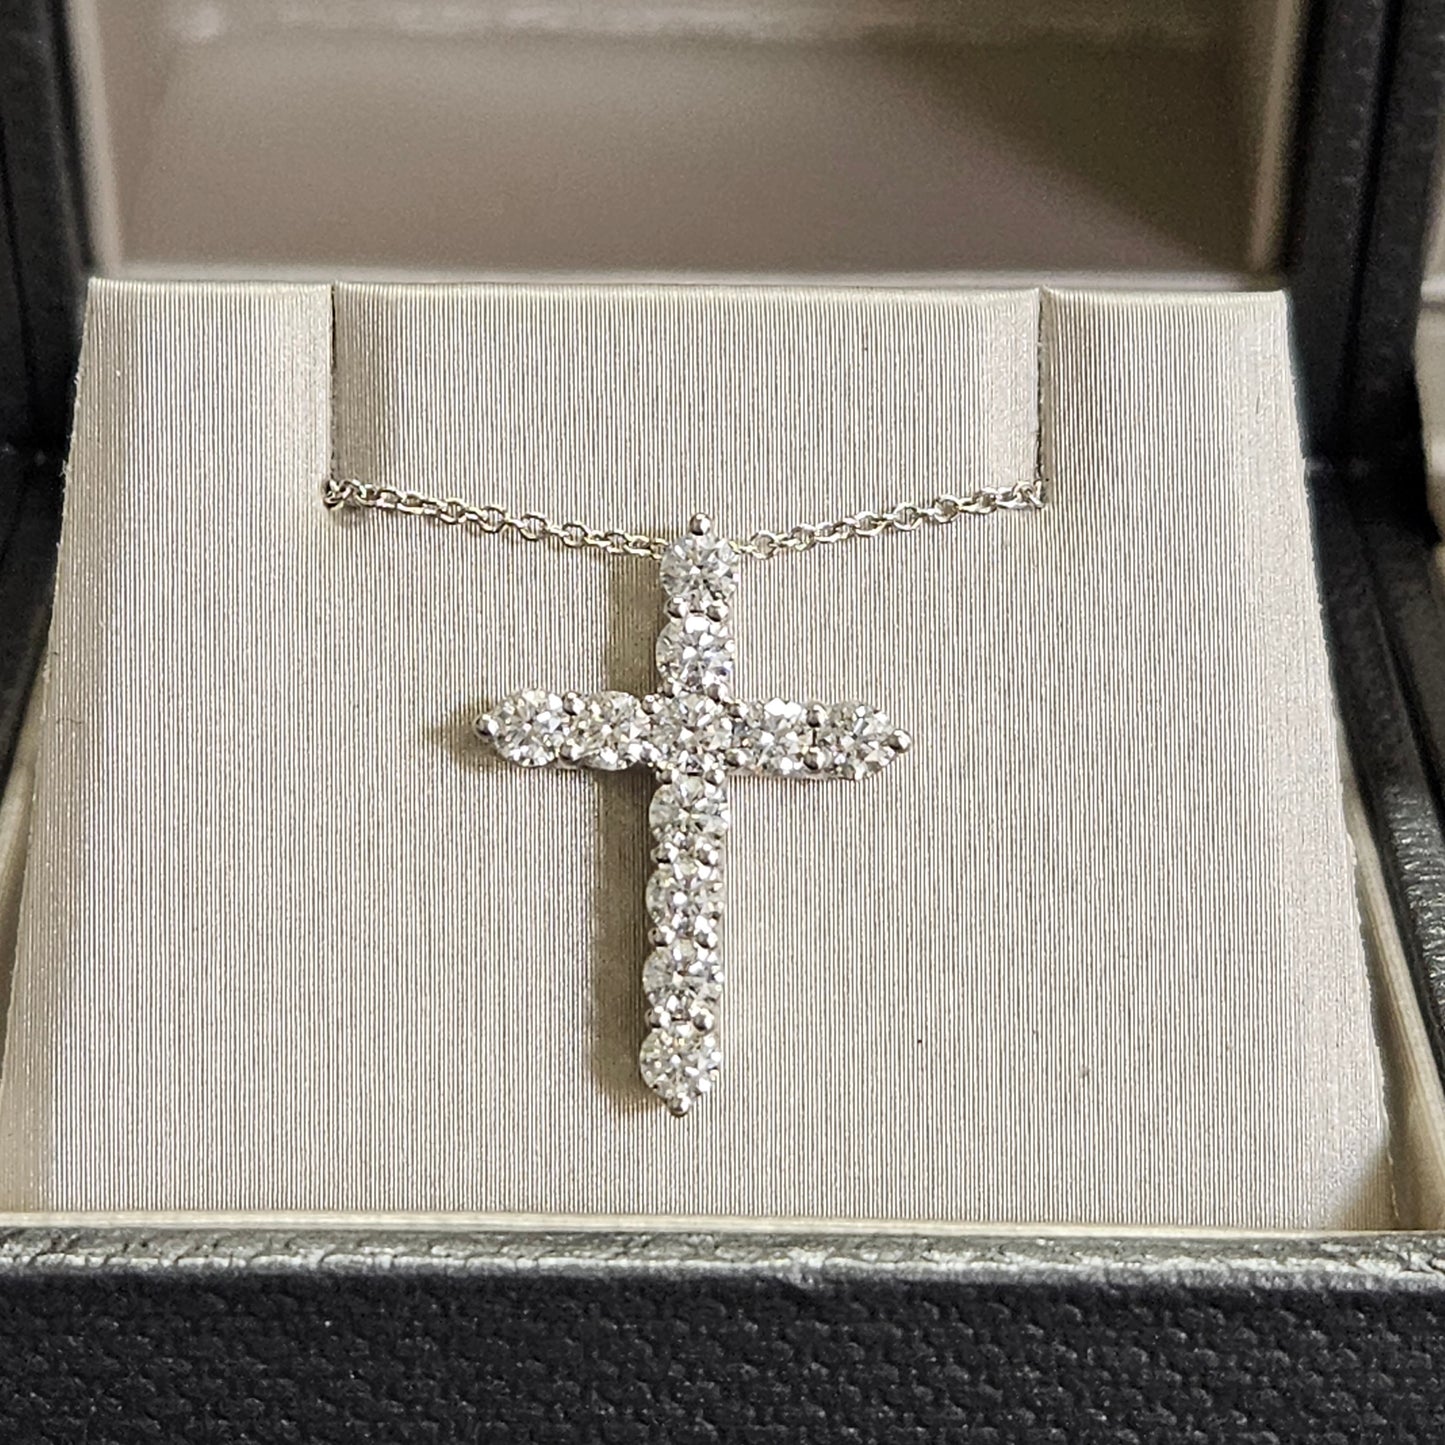 0.8ct Round Diamond Cross Pendant / Religious Diamond Cross Pendant / Adjustable Length / 14K Gold Cross Necklace / Anniversary Gift